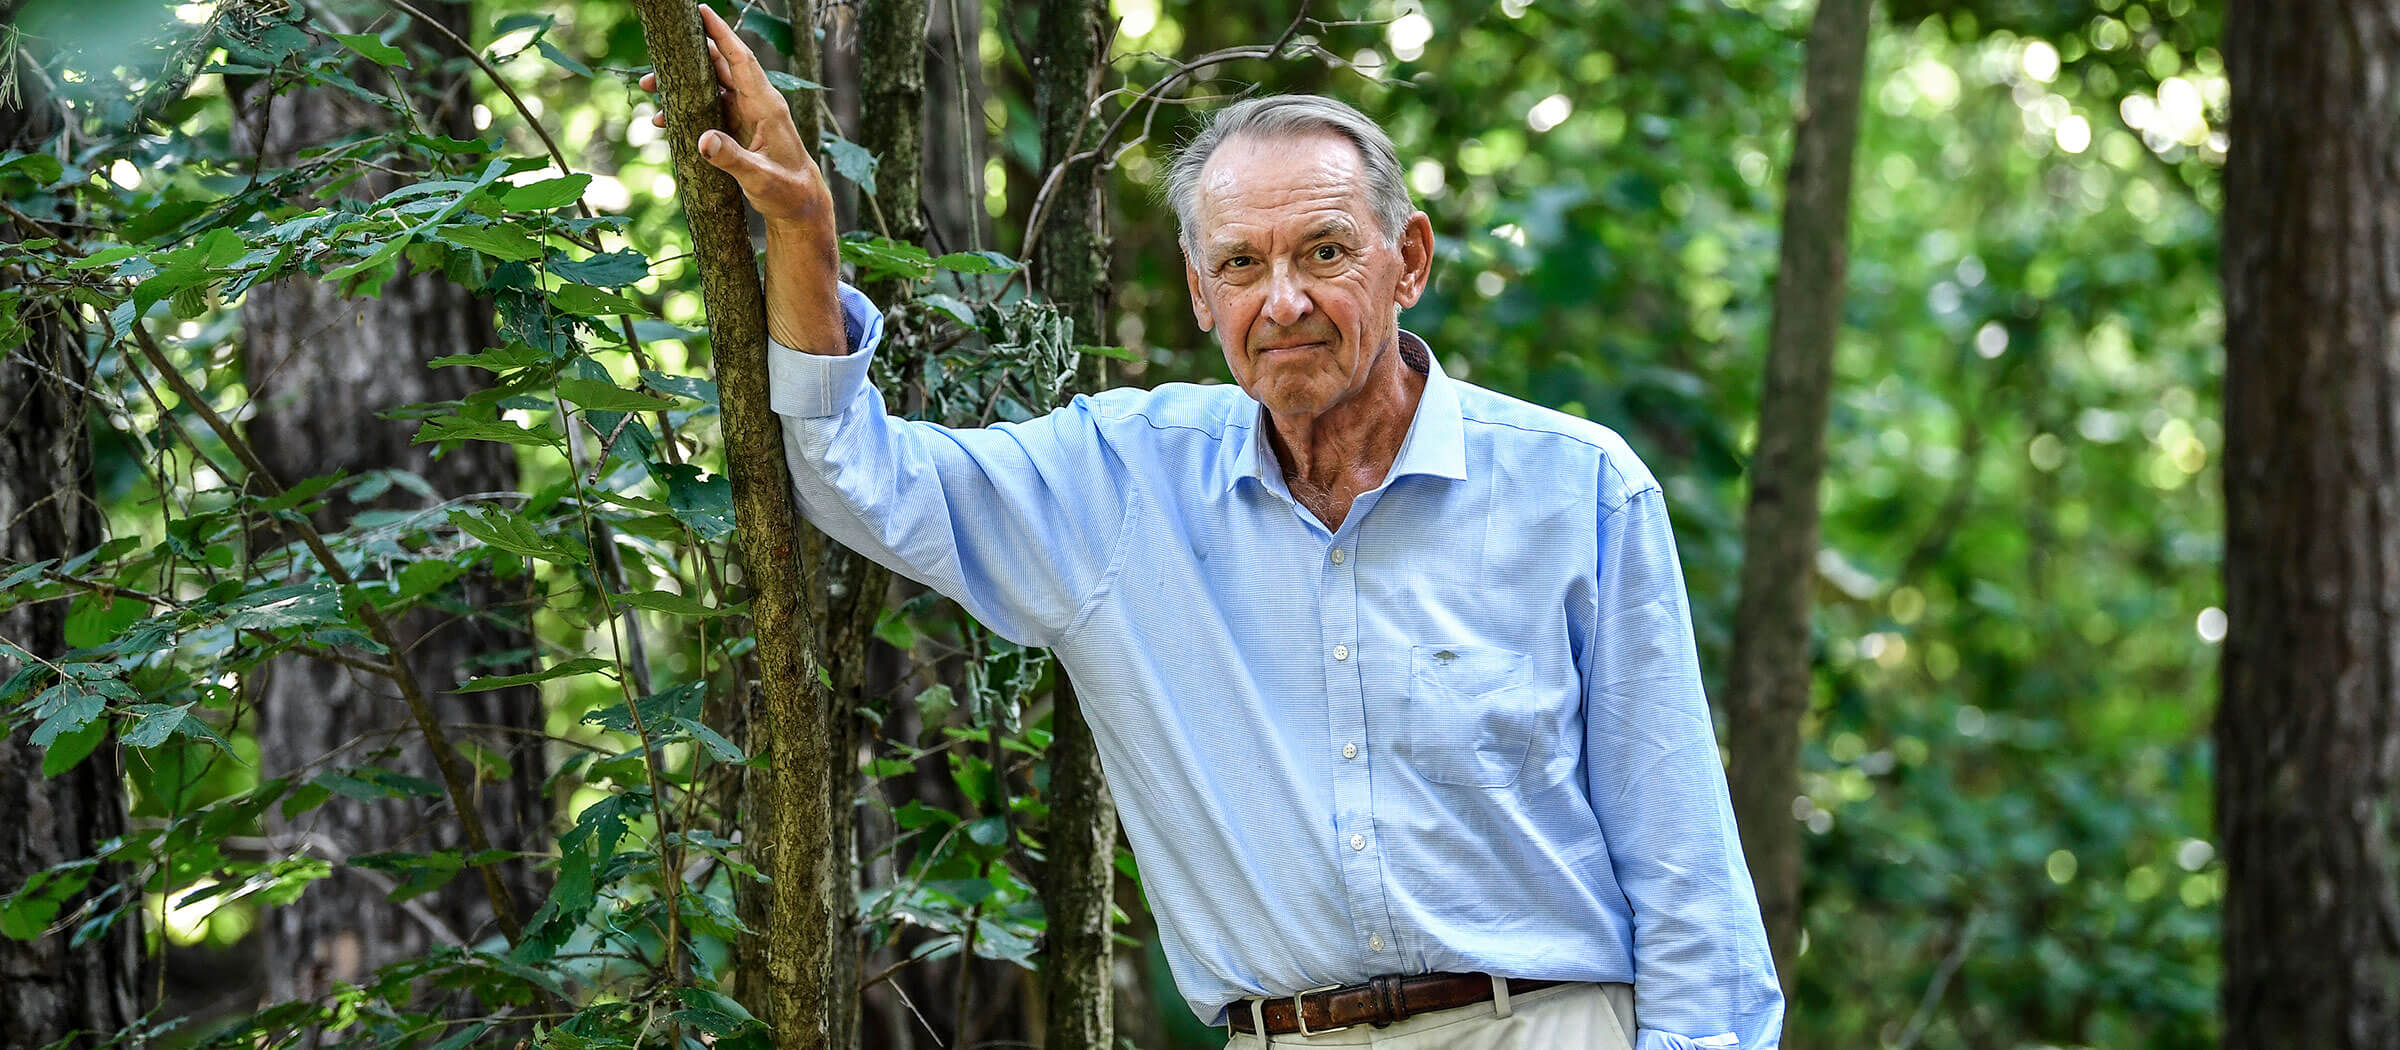 Jan Eliasson stående i växtmiljö.